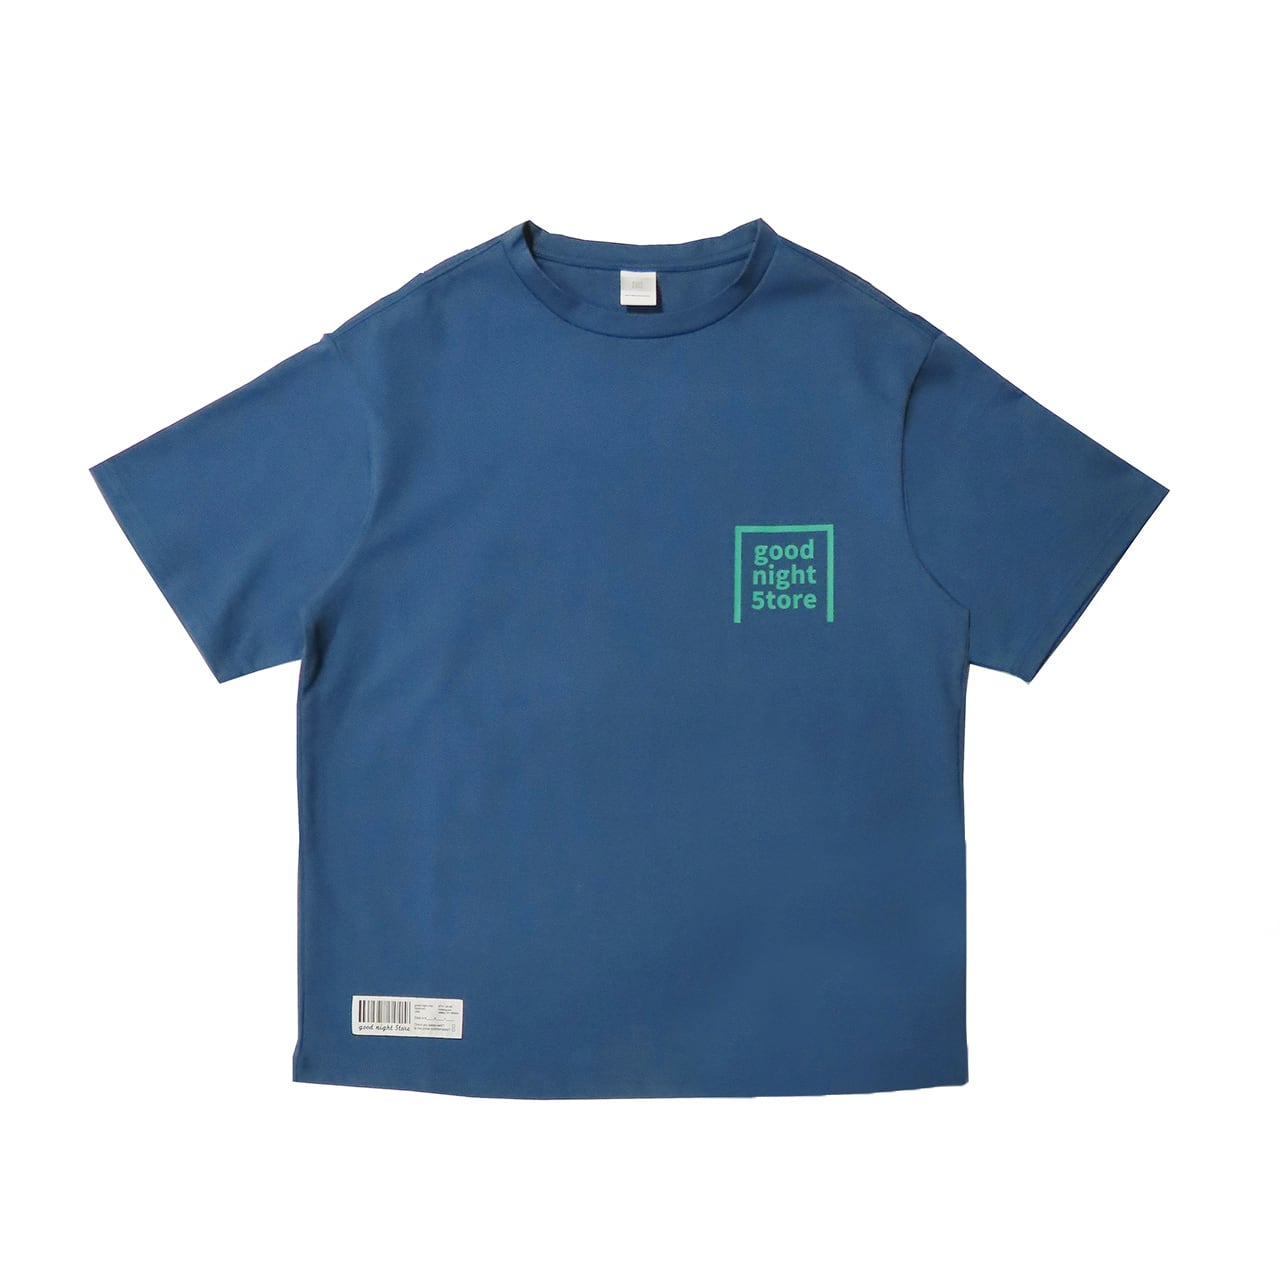 goodnight5tore t-shirt logo-neon blue